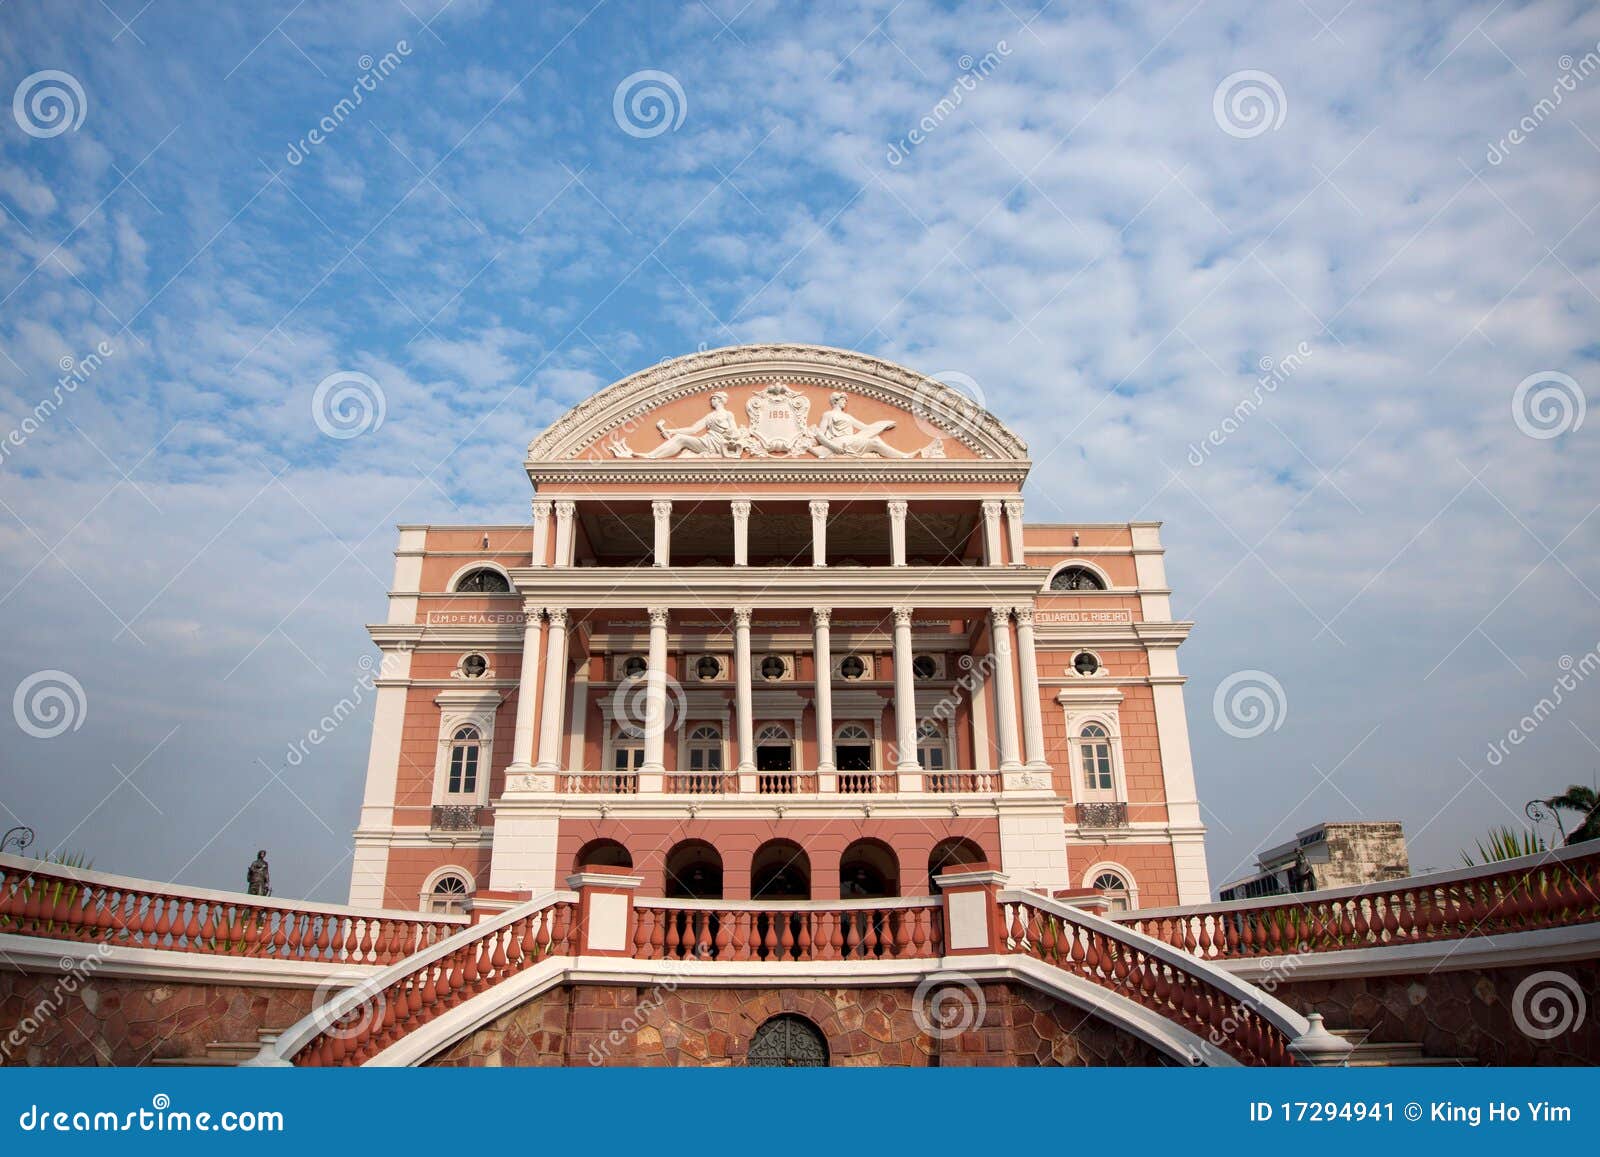 historical manaus opera house